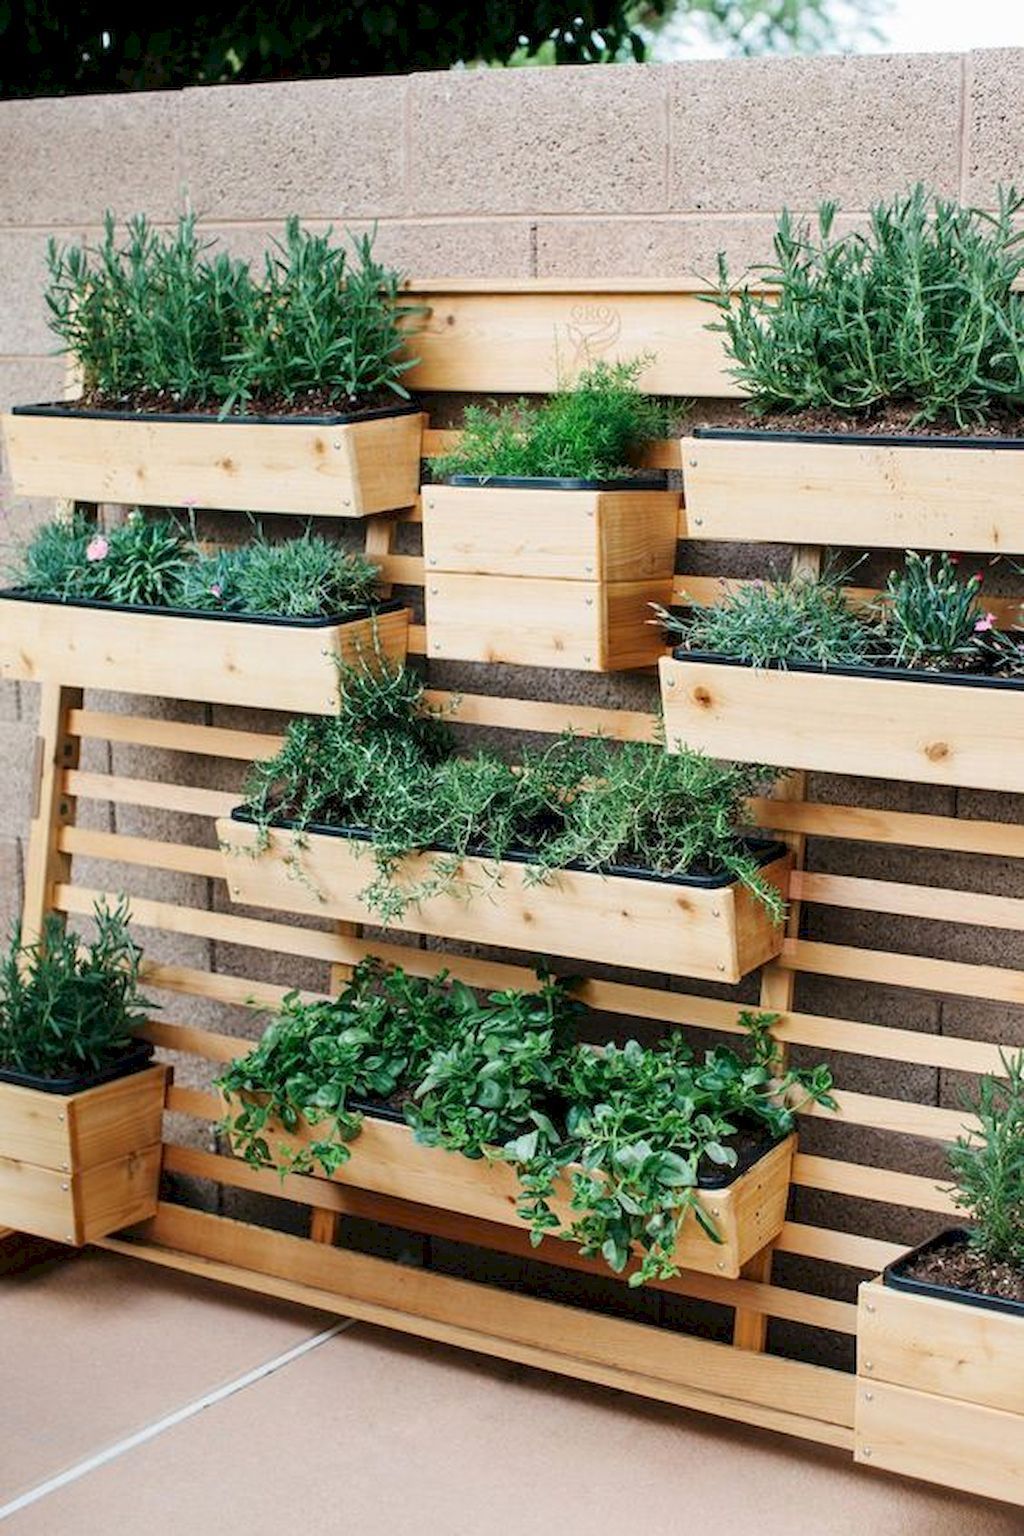 50 Most Productive Small Vegetable Garden Ideas for Small Space -   19 garden design Wall plants ideas